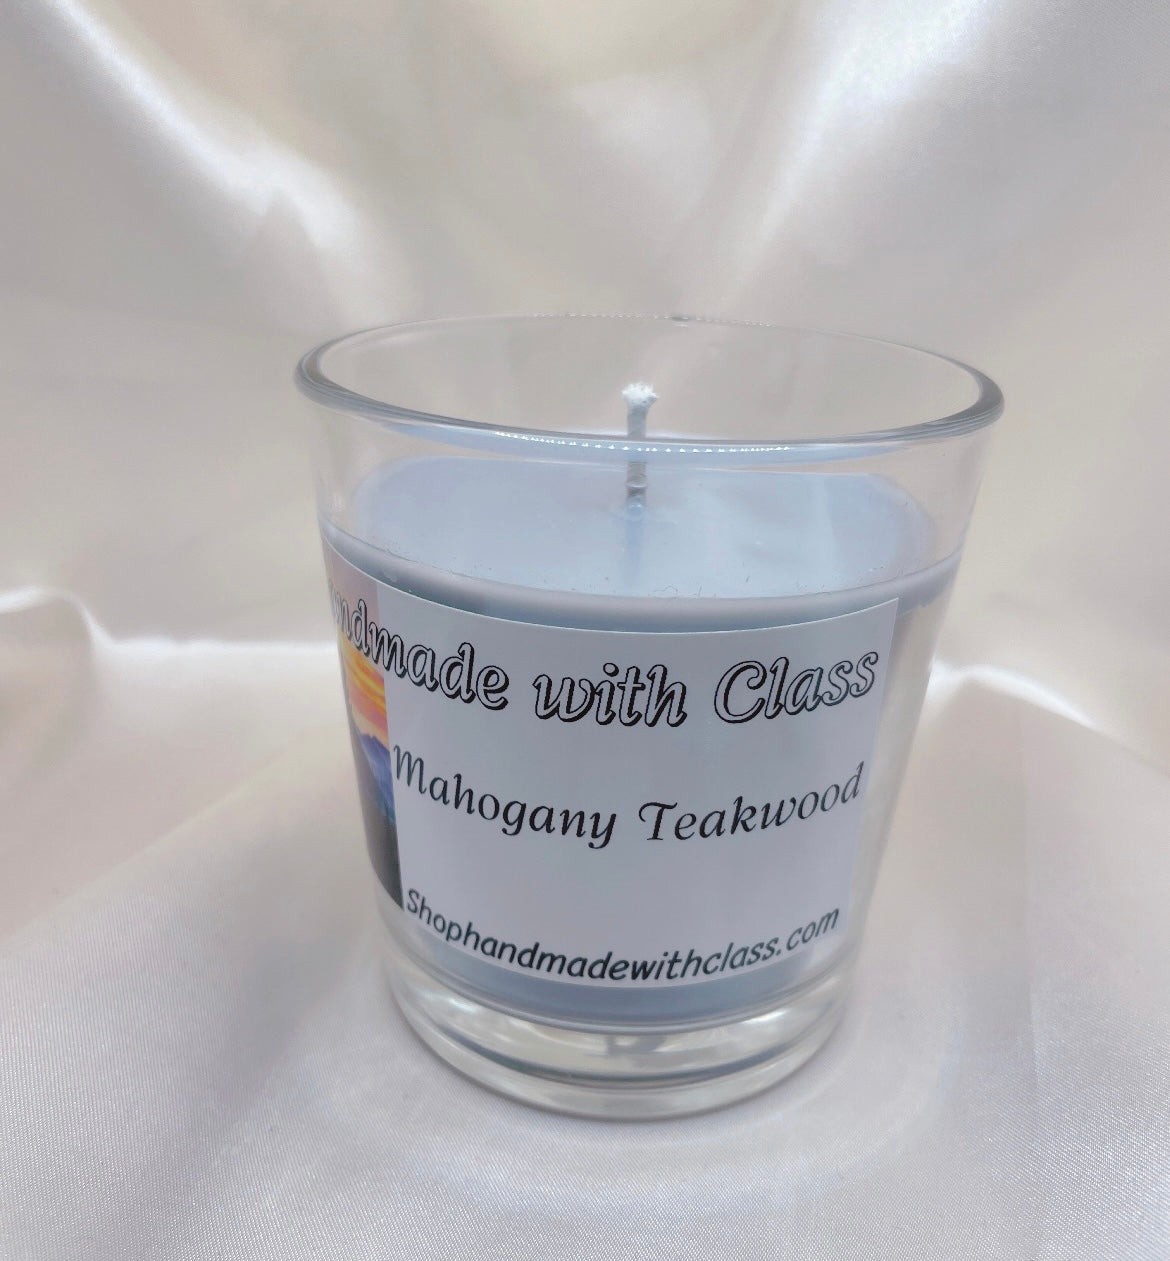 Mahogany Teakwood Candle